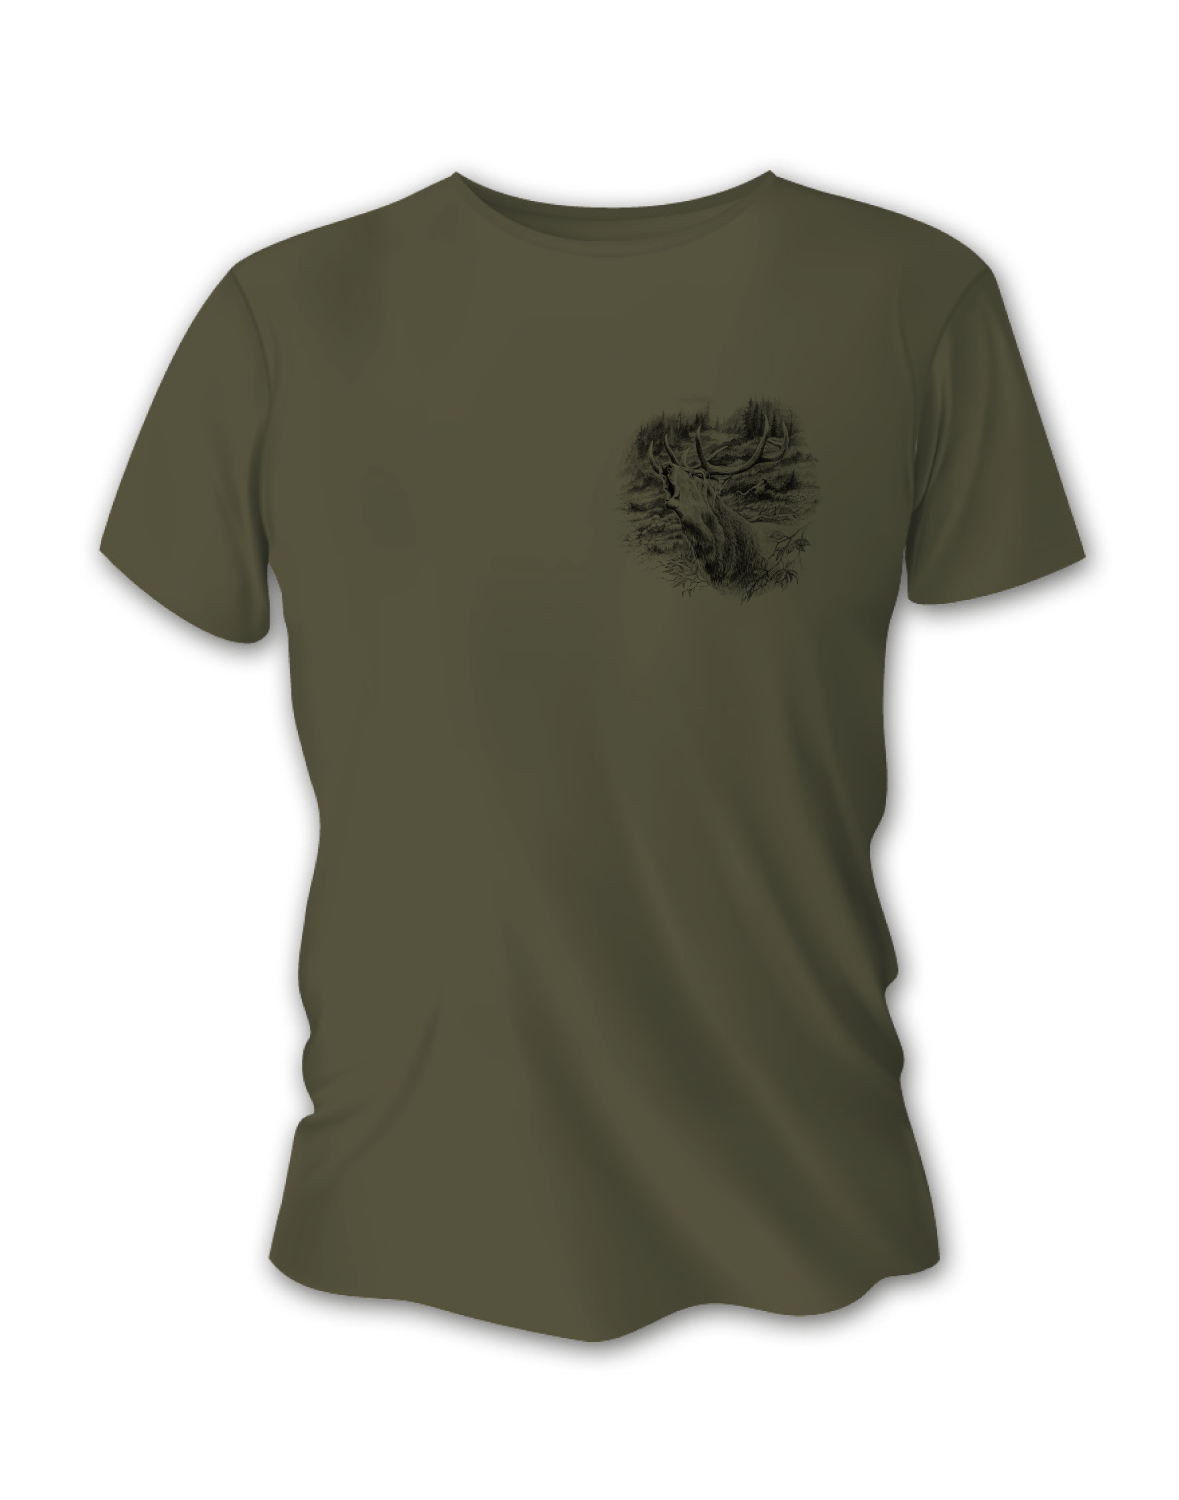 Pánske poľovnícke tričko TETRAO jeleň malý - zelené   L